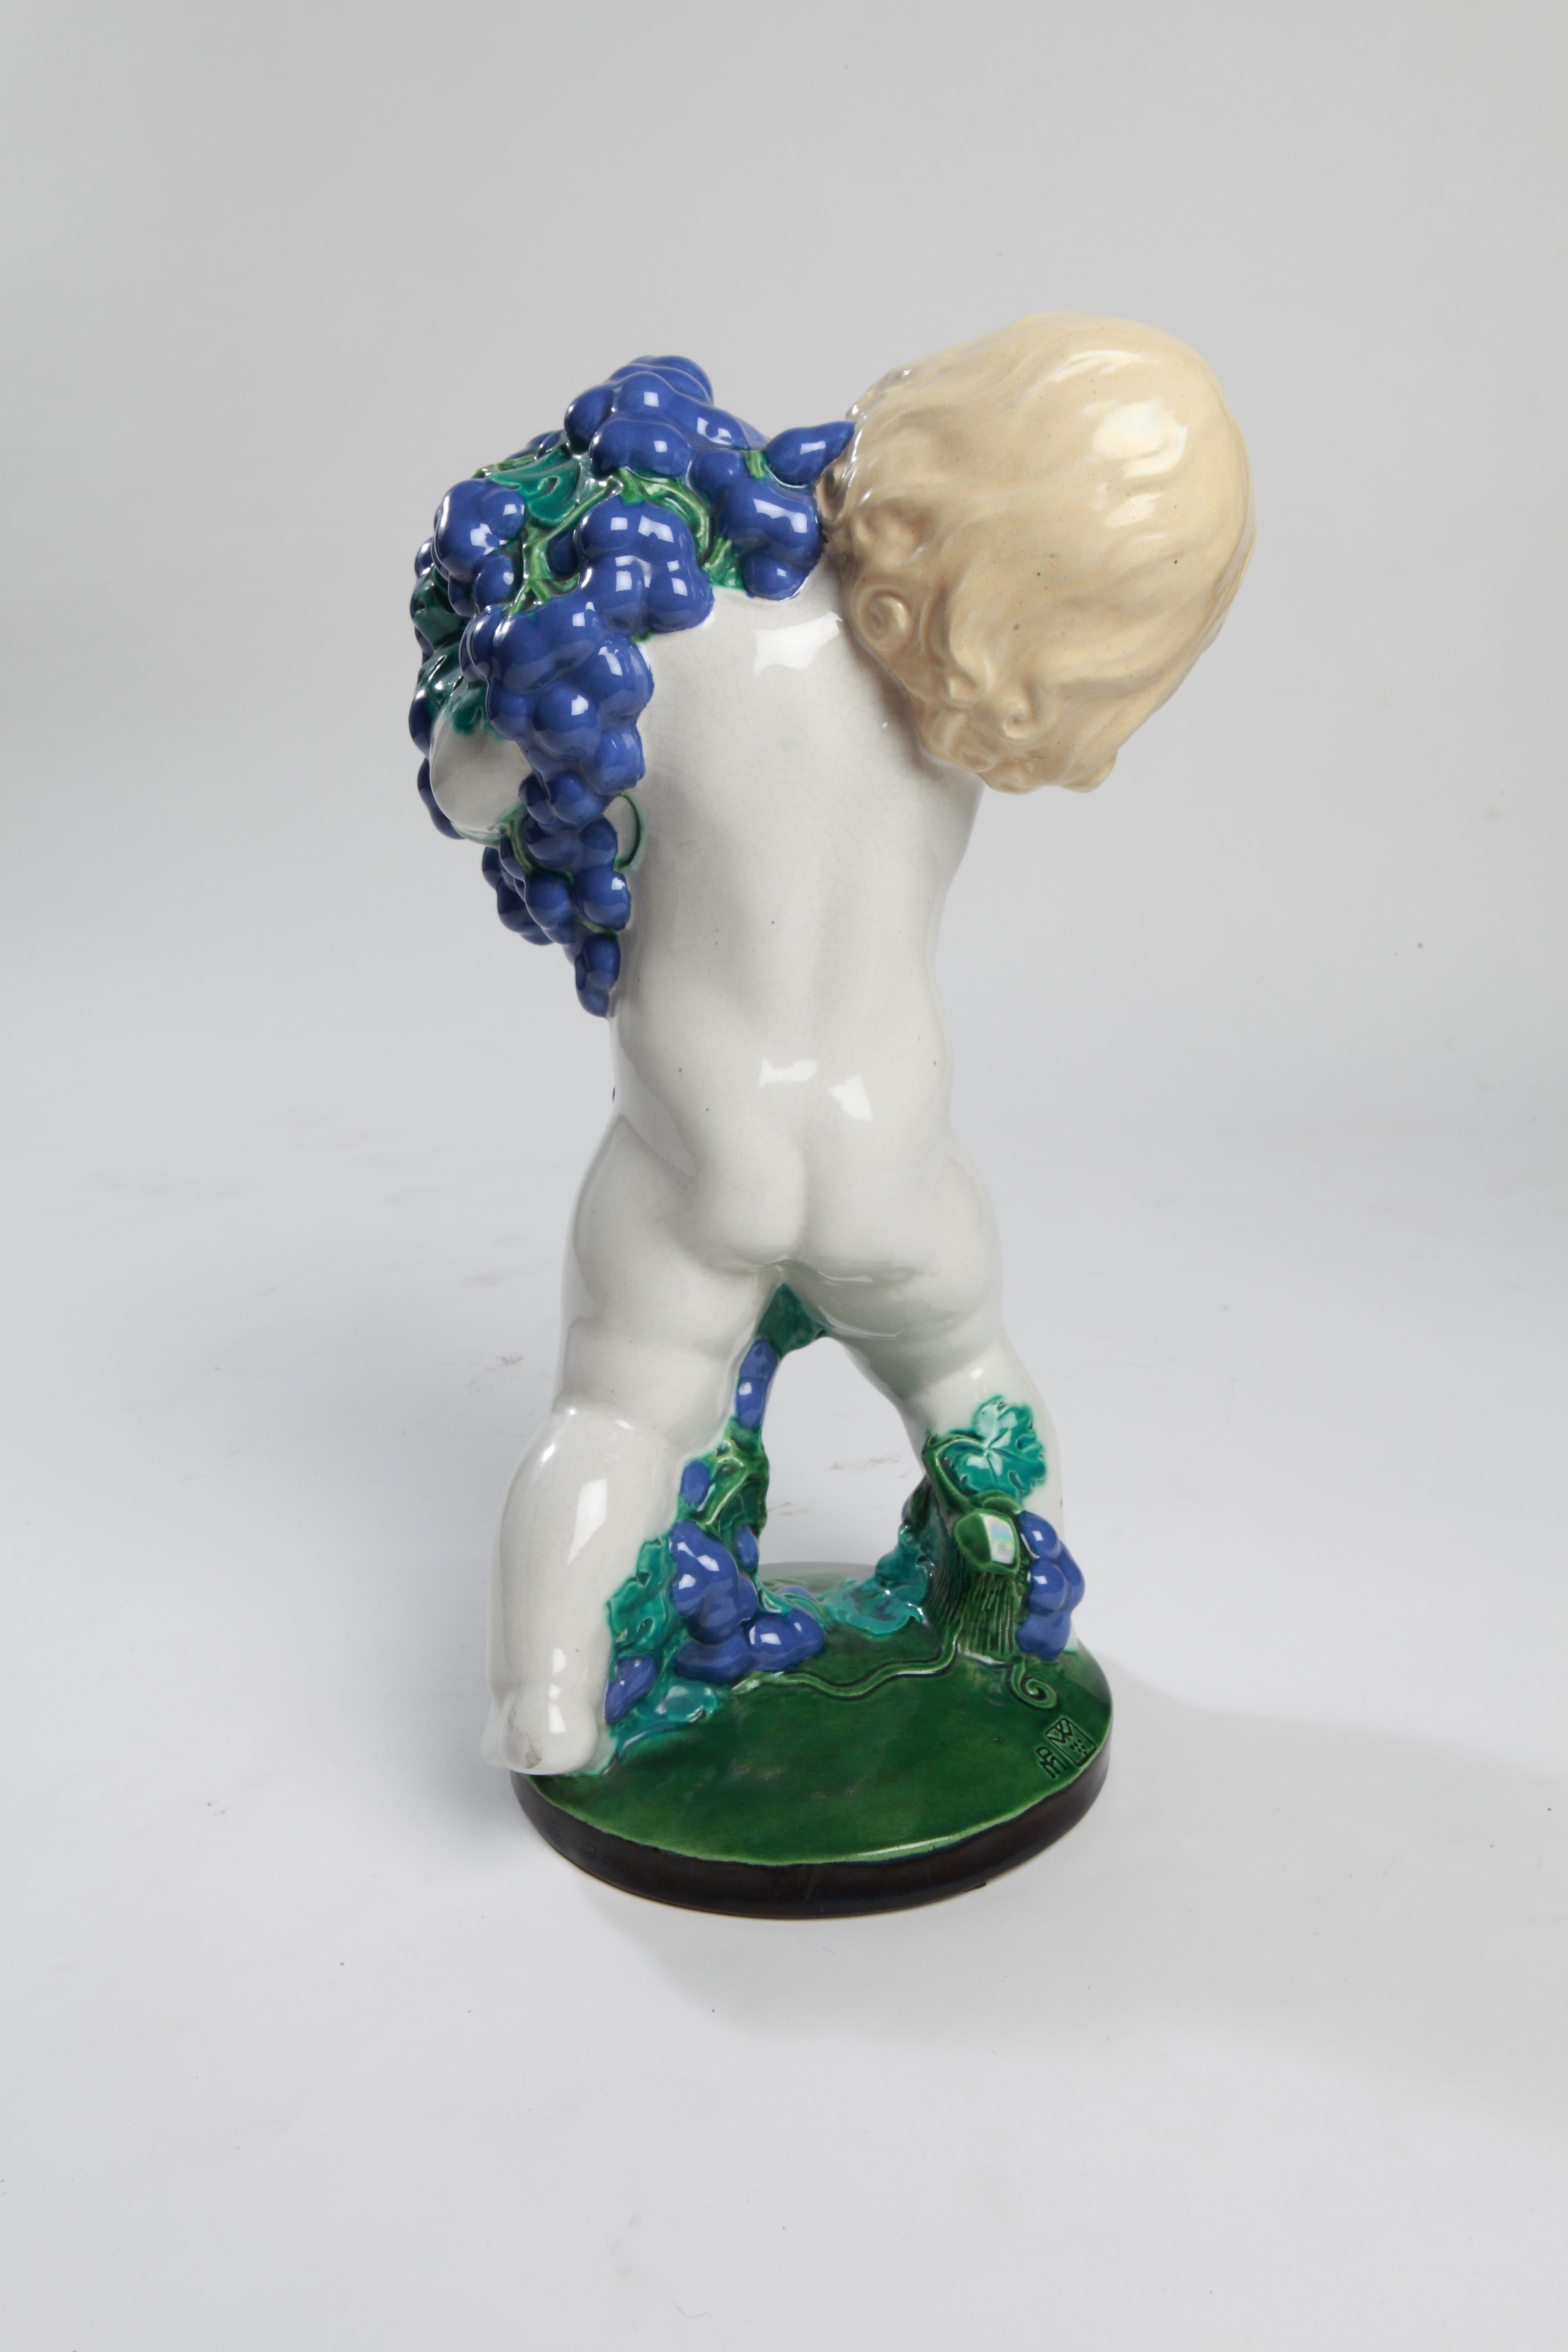 Ceramic sculpture, circa 1907, designed by Michael Powolny (1871-1954), Austrian ceramist, sculptor, designer, glass and metal artist. 